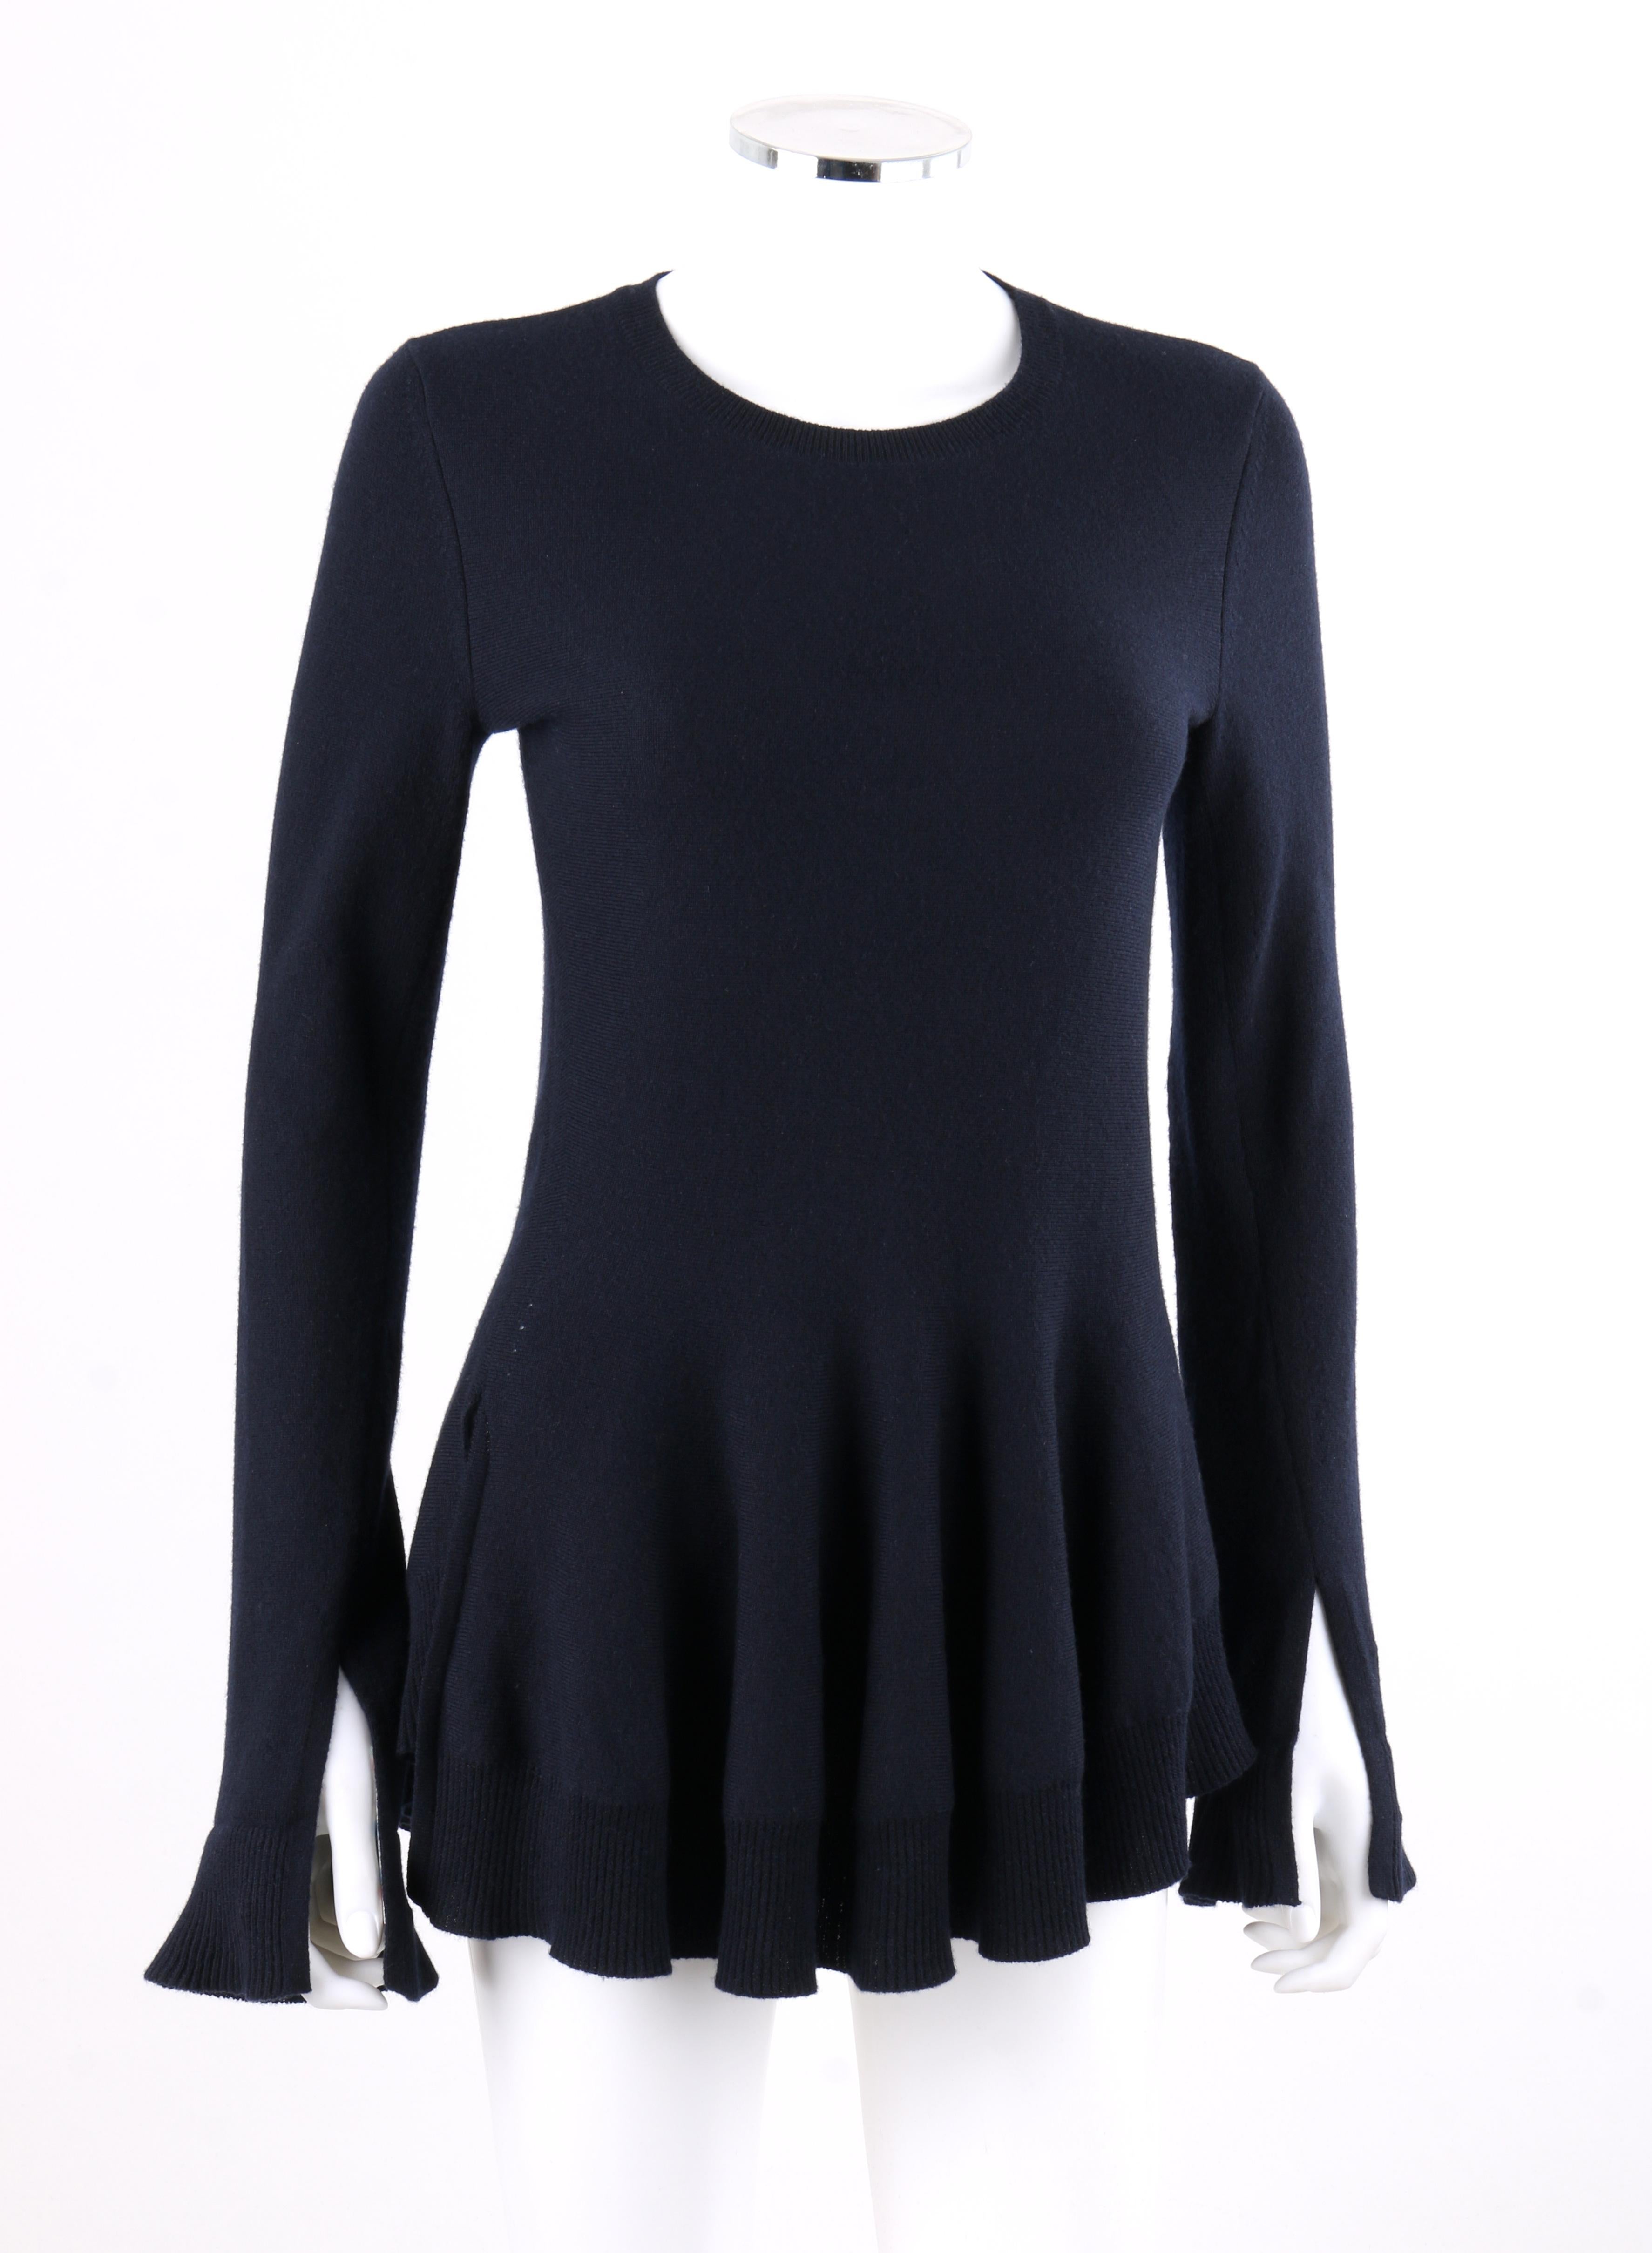 DESCRIPTION: ALEXANDER McQUEEN Navy Blue Cashmere Knit Peplum Sweater
 
Estimated Retail: $1,310
 
Brand / Manufacturer: Alexander McQueen
Collection: 
Designer: Sarah Burton
Manufacturer Style Name: 
Style: Peplum sweater
Color(s): Navy blue
Lined: